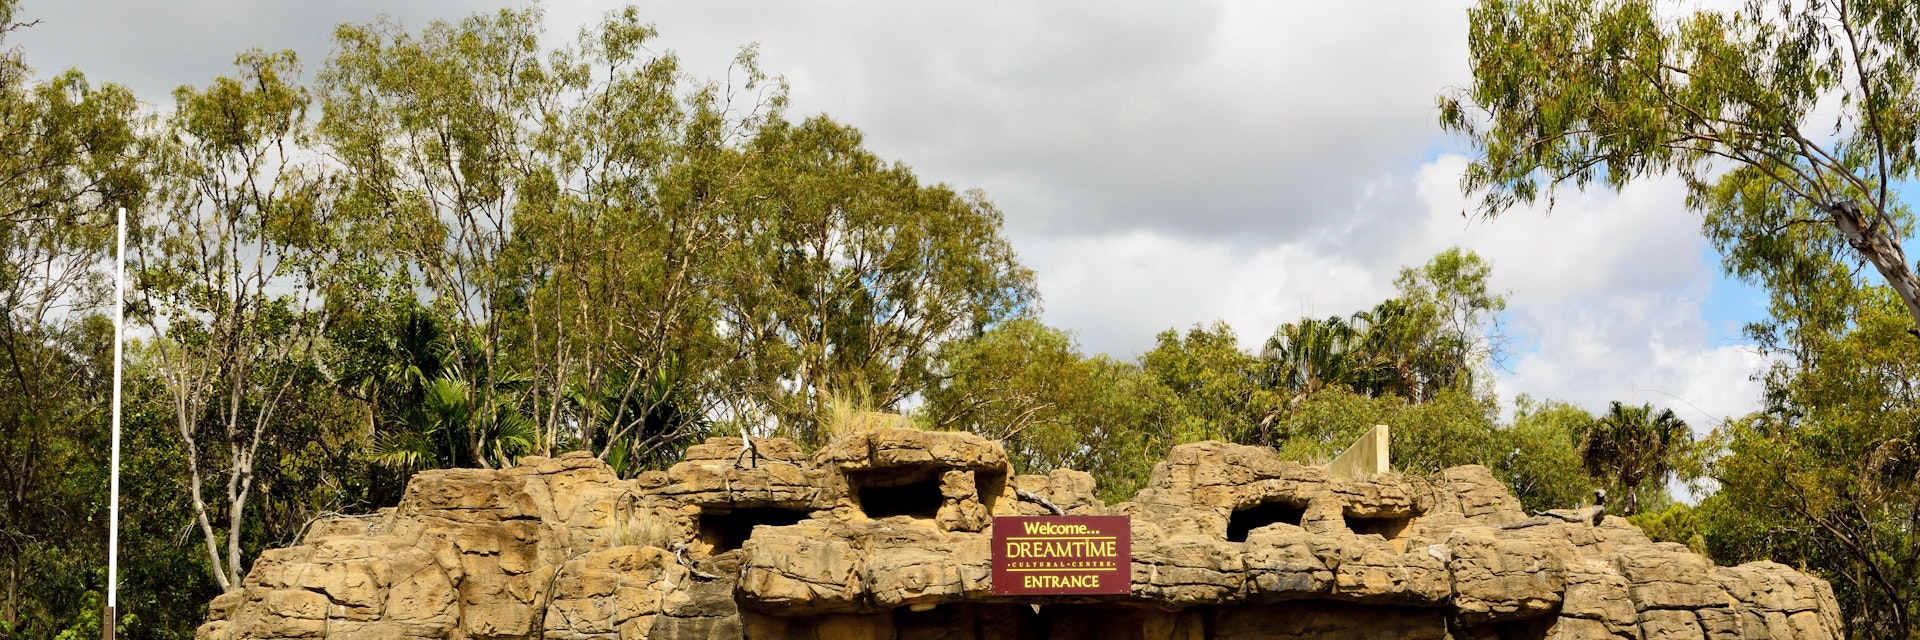 Rockhampton, Queensland, Australia - December 27, 2017. Exterior view of Dreamtime aboriginal cultural centre in Rockhampton, QLD, with vegetation.